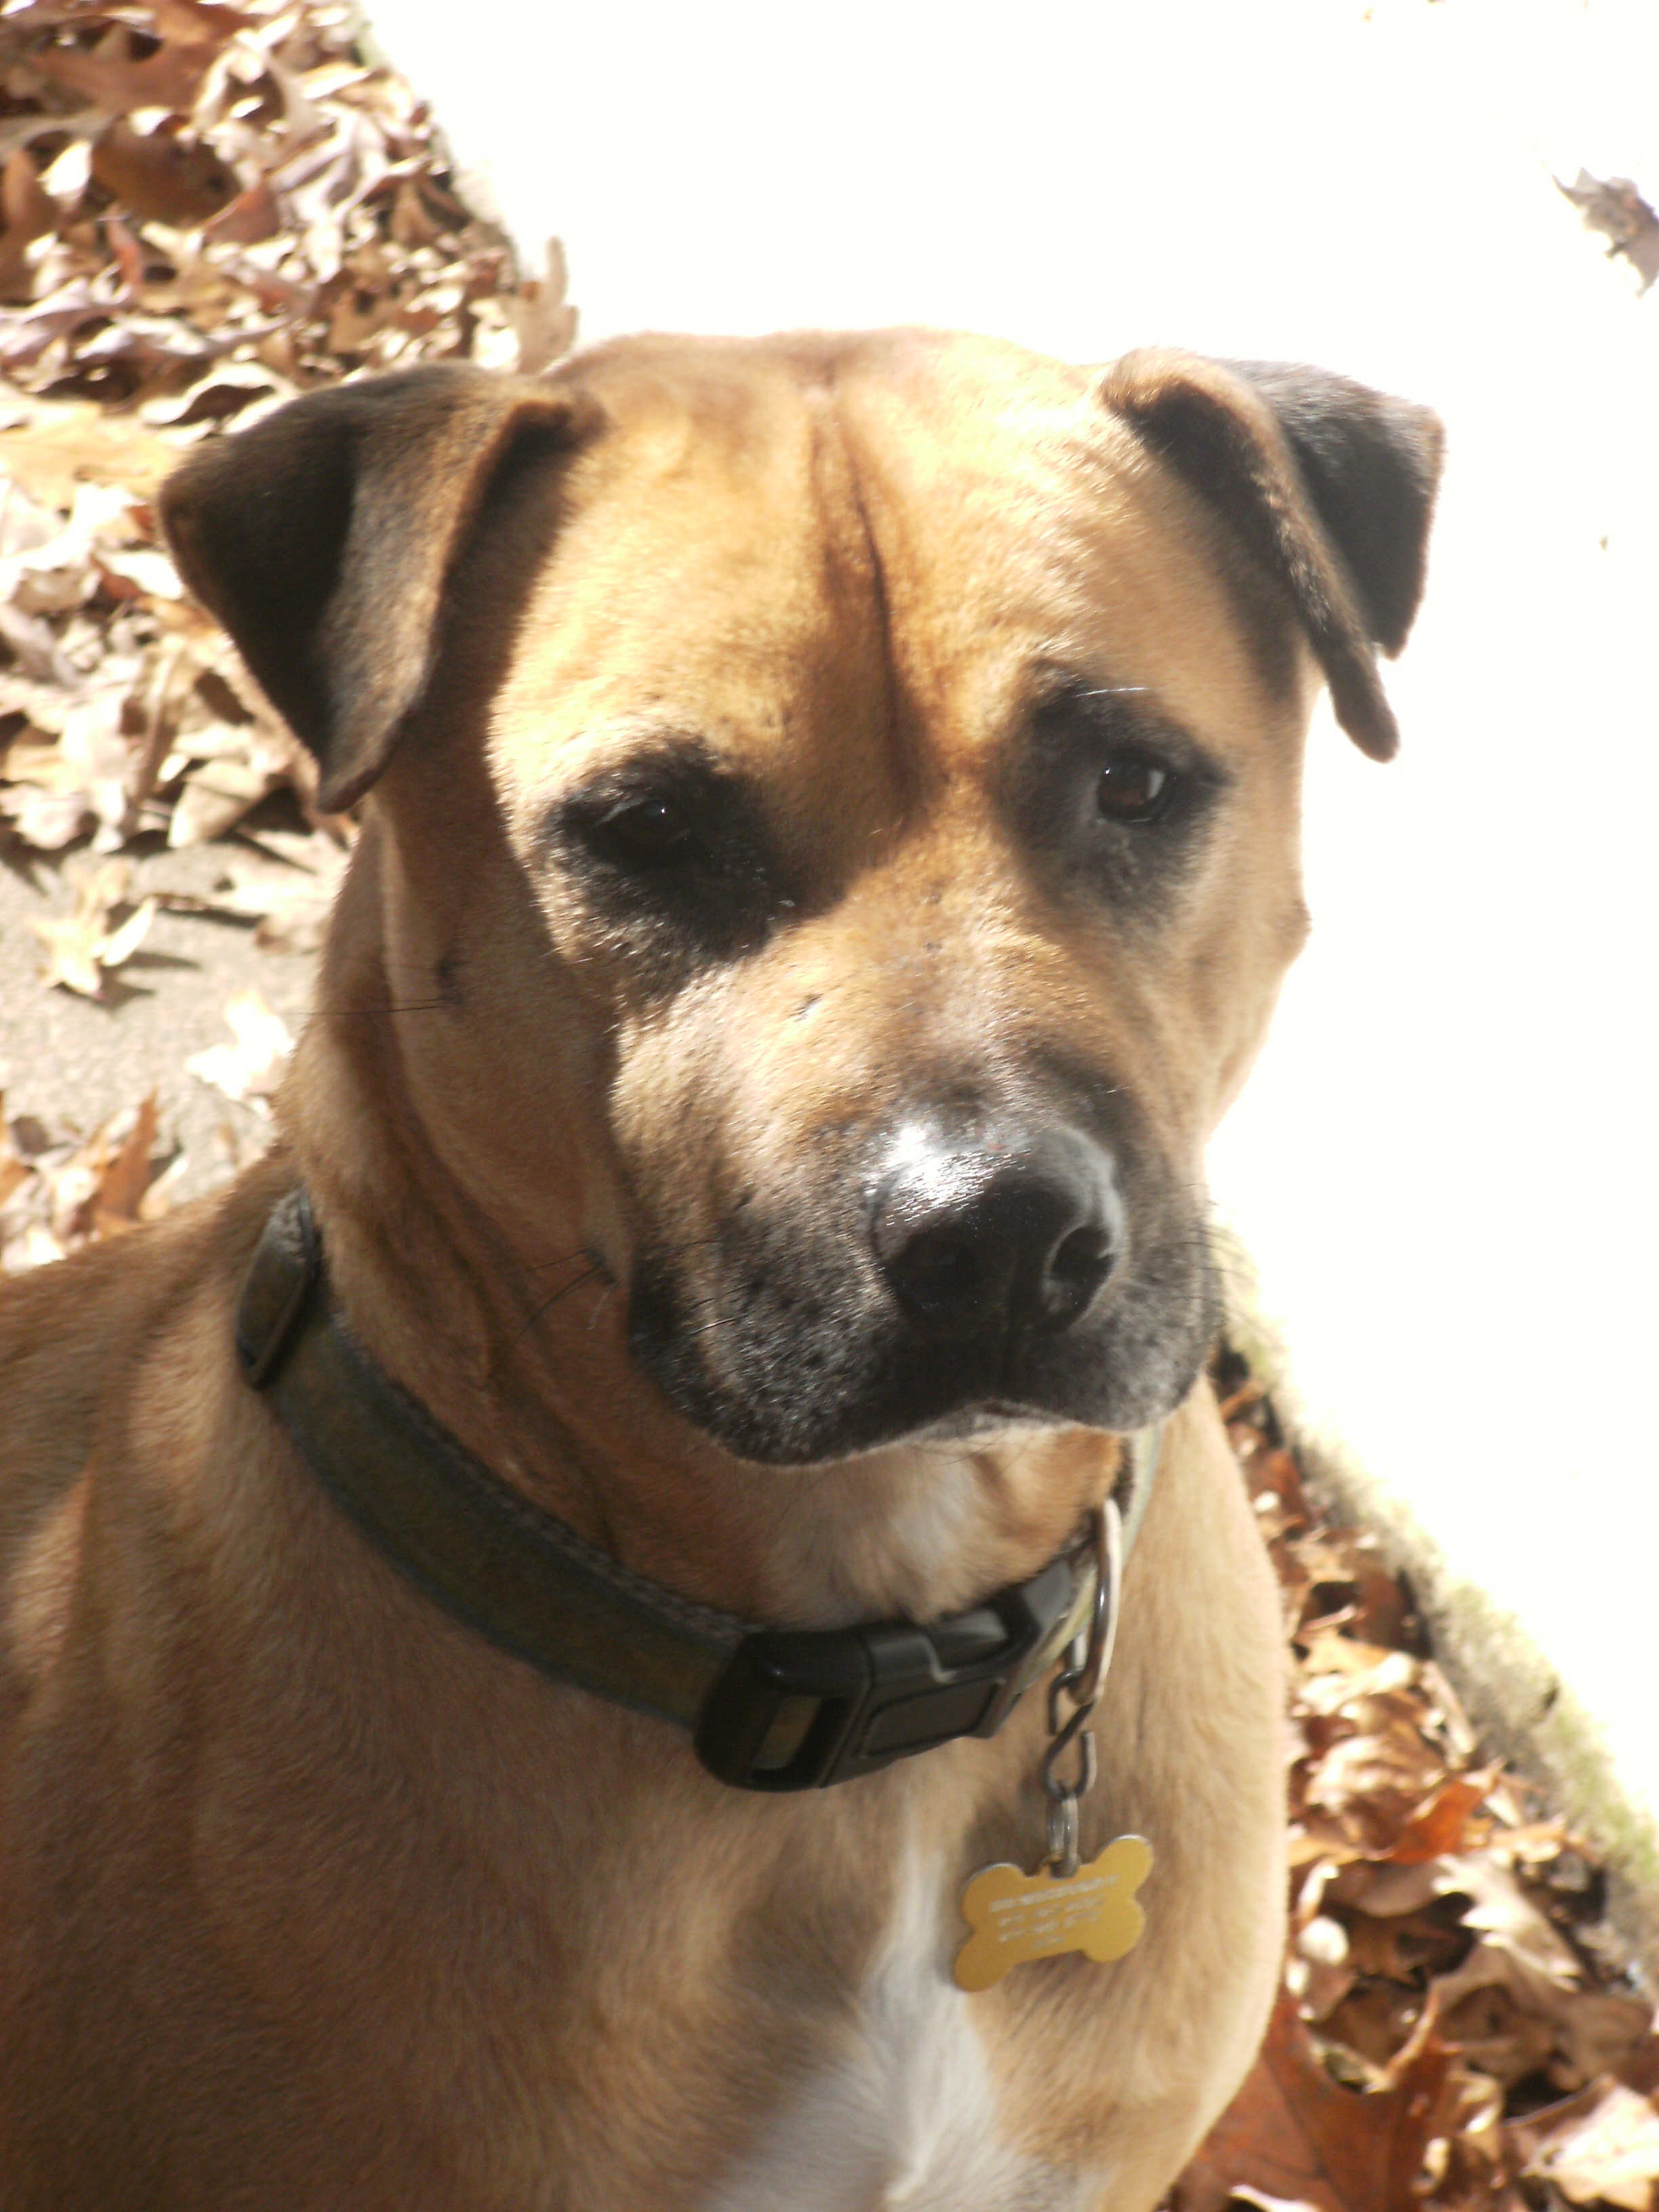 Walker - Dog from Hurricane Katrina Still Up for Adoption